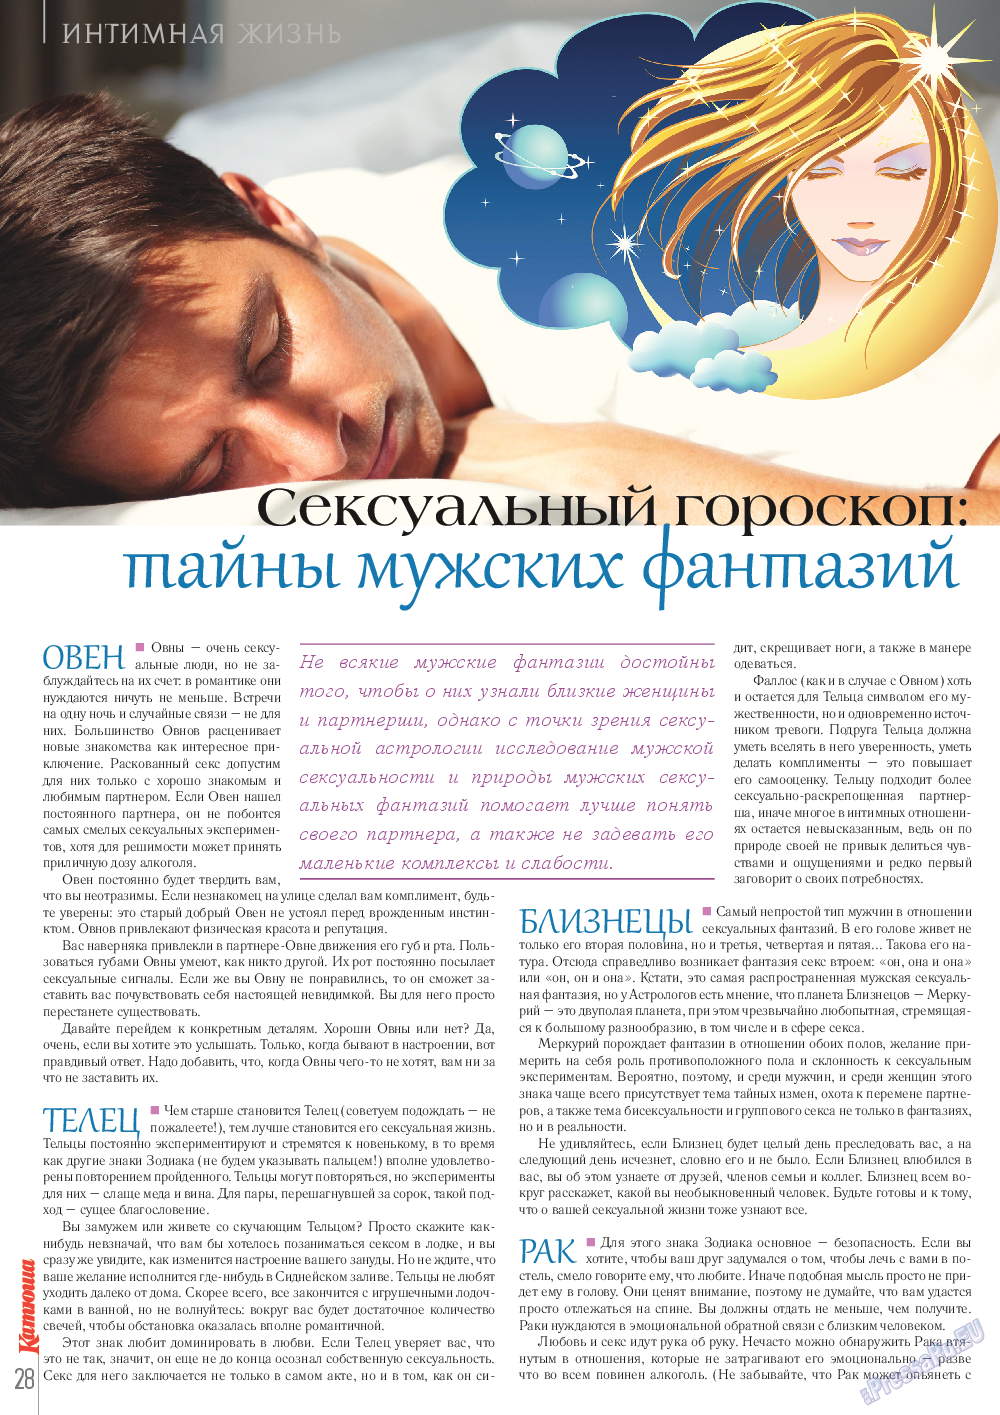 Катюша, журнал. 2014 №38 стр.28